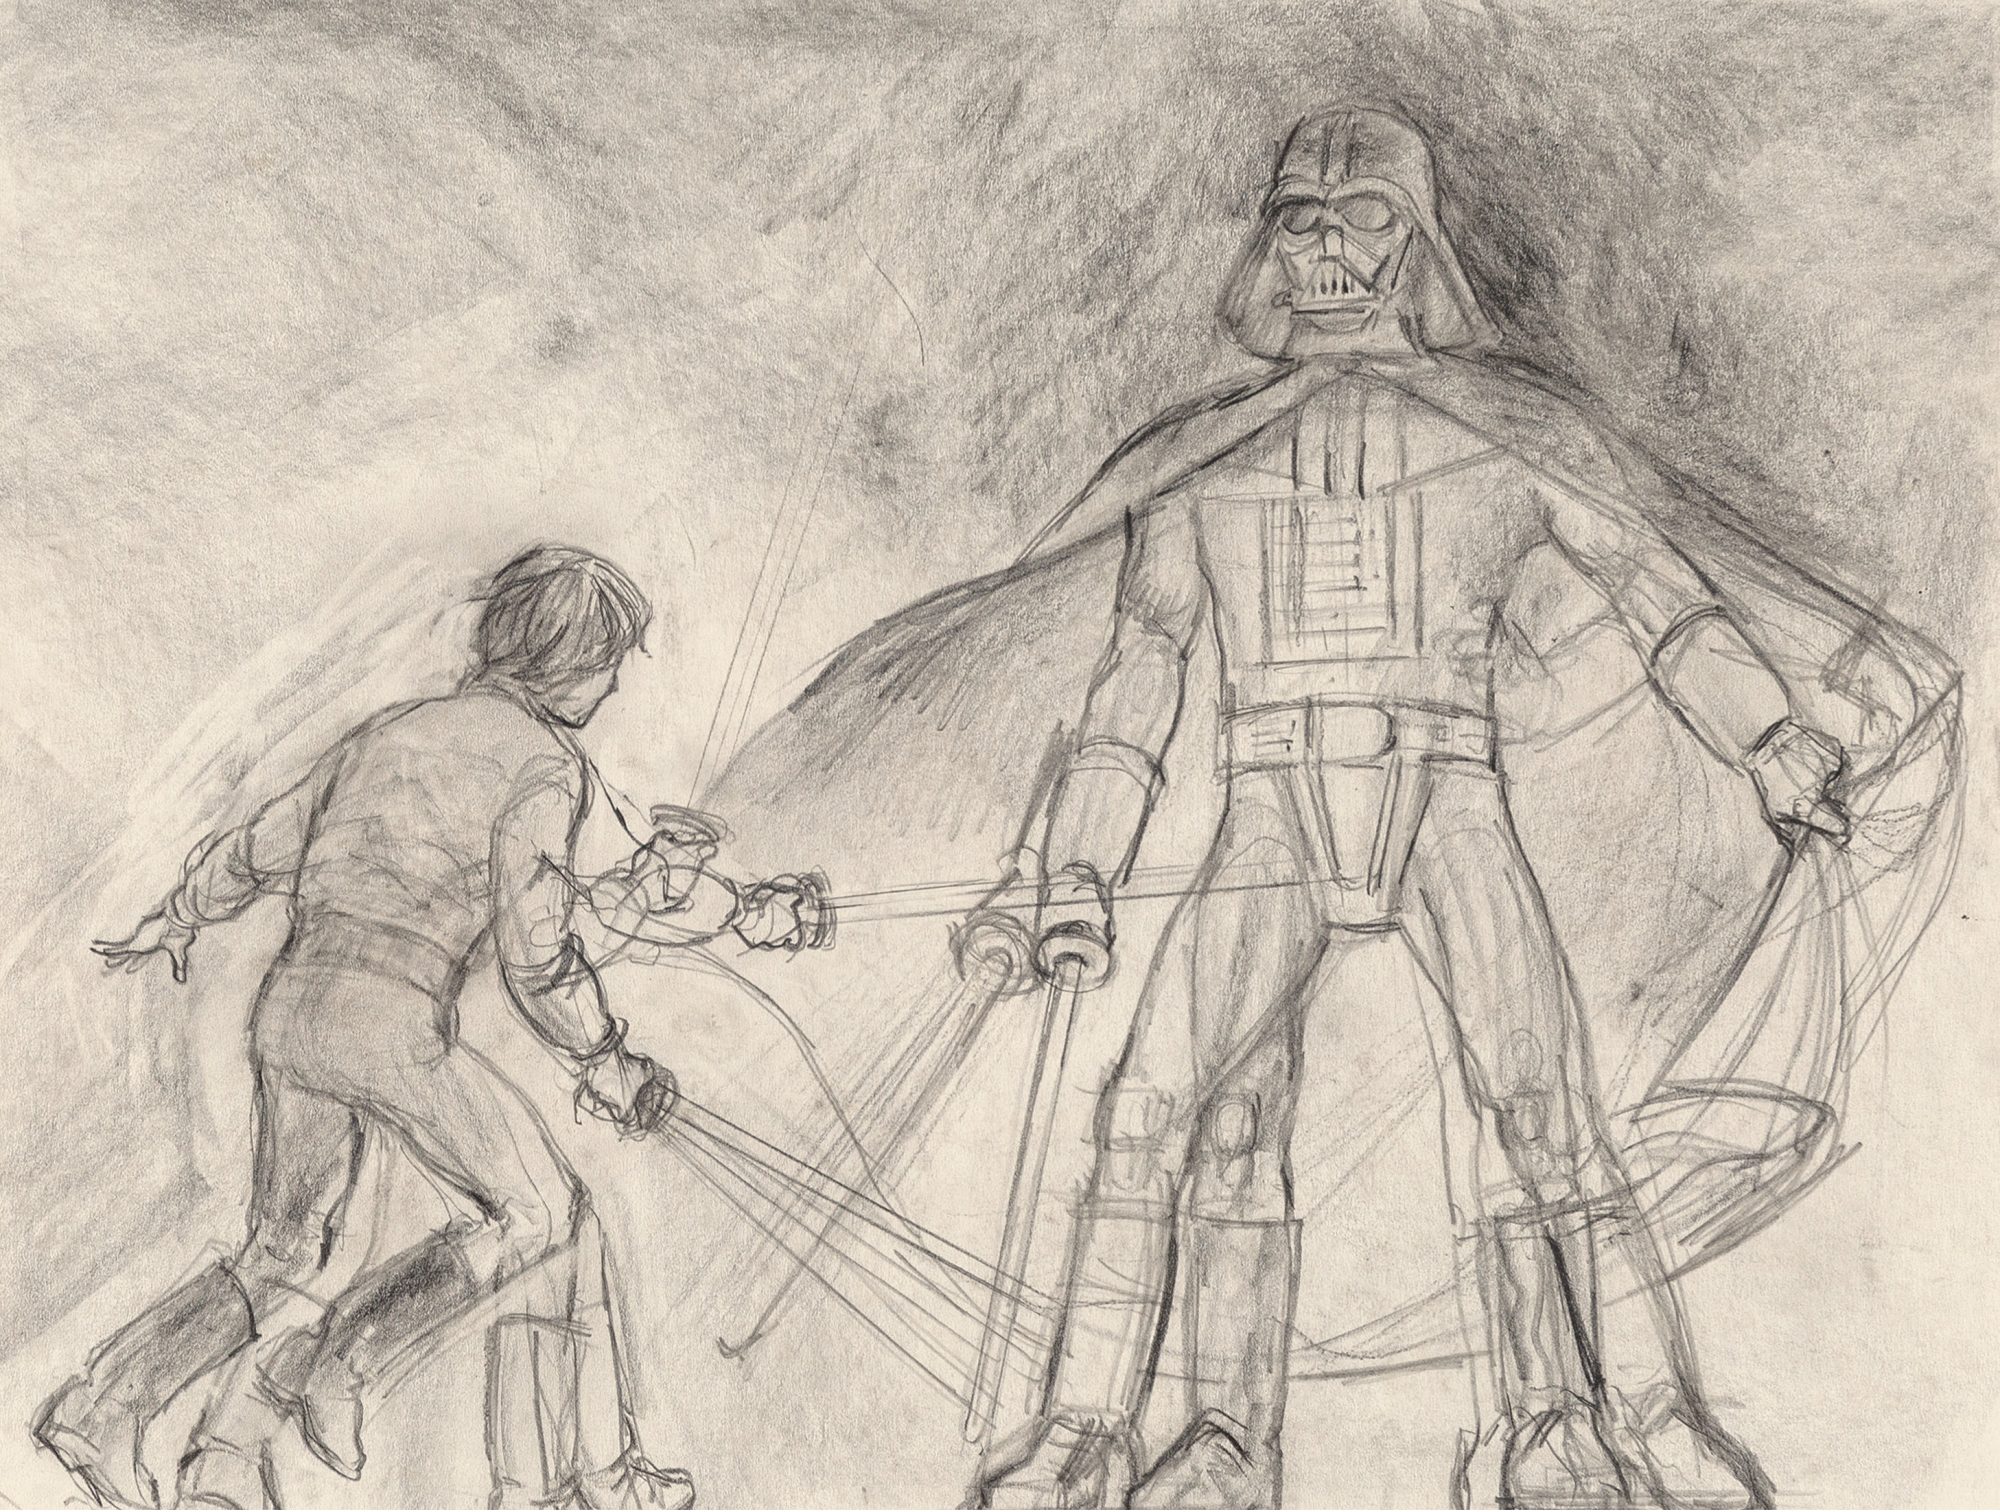 Tom Jung Star Wars Episode VI - Return of the Jedi, movie poster concept art